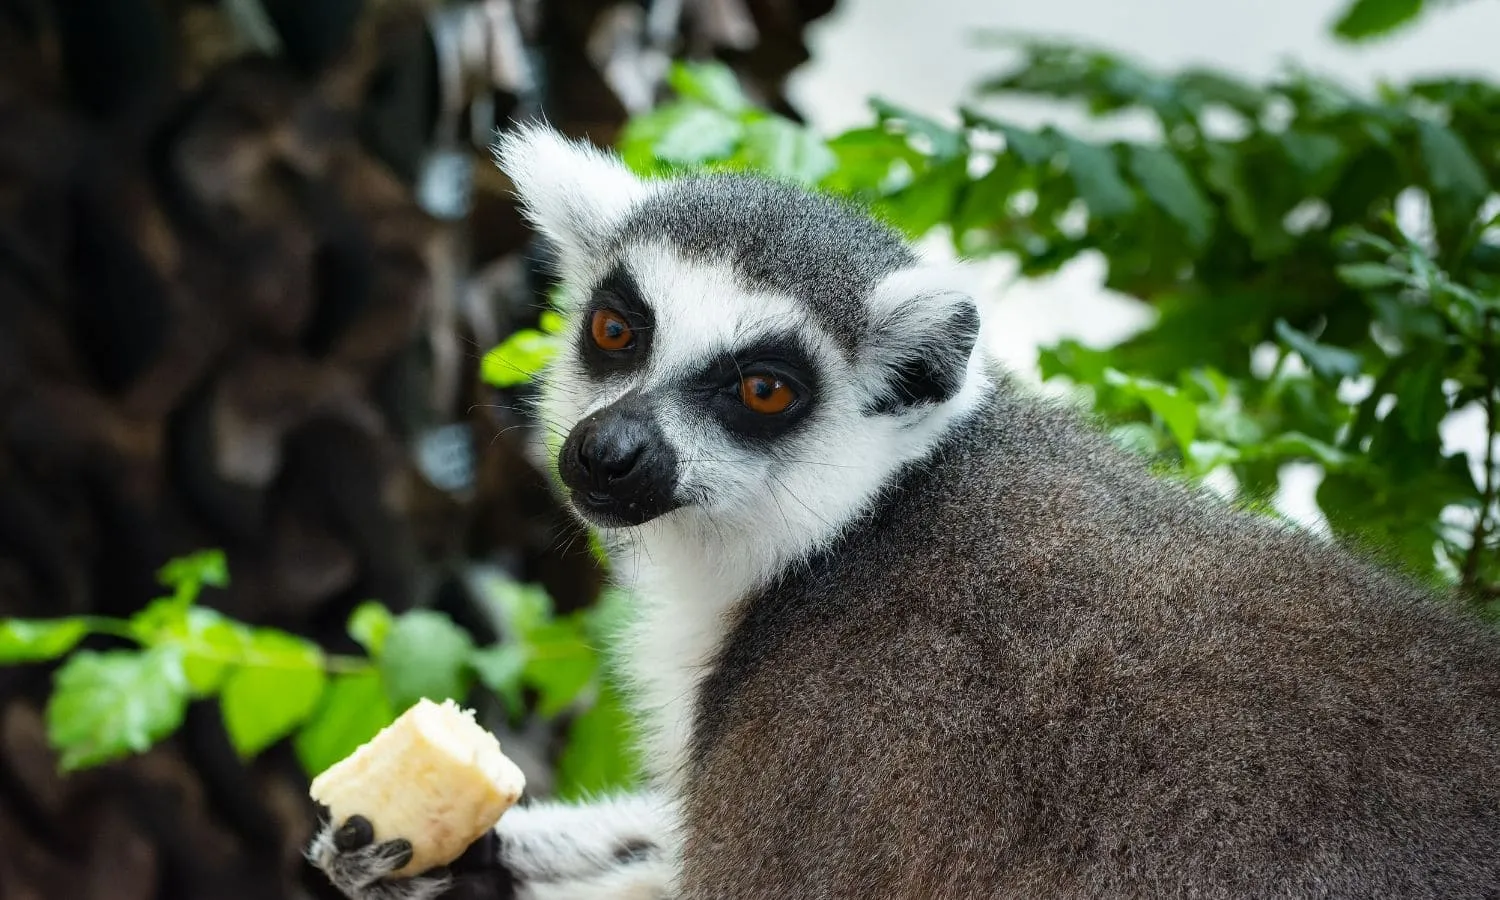 A Lemur eating food inside the Green Planet in Dubai